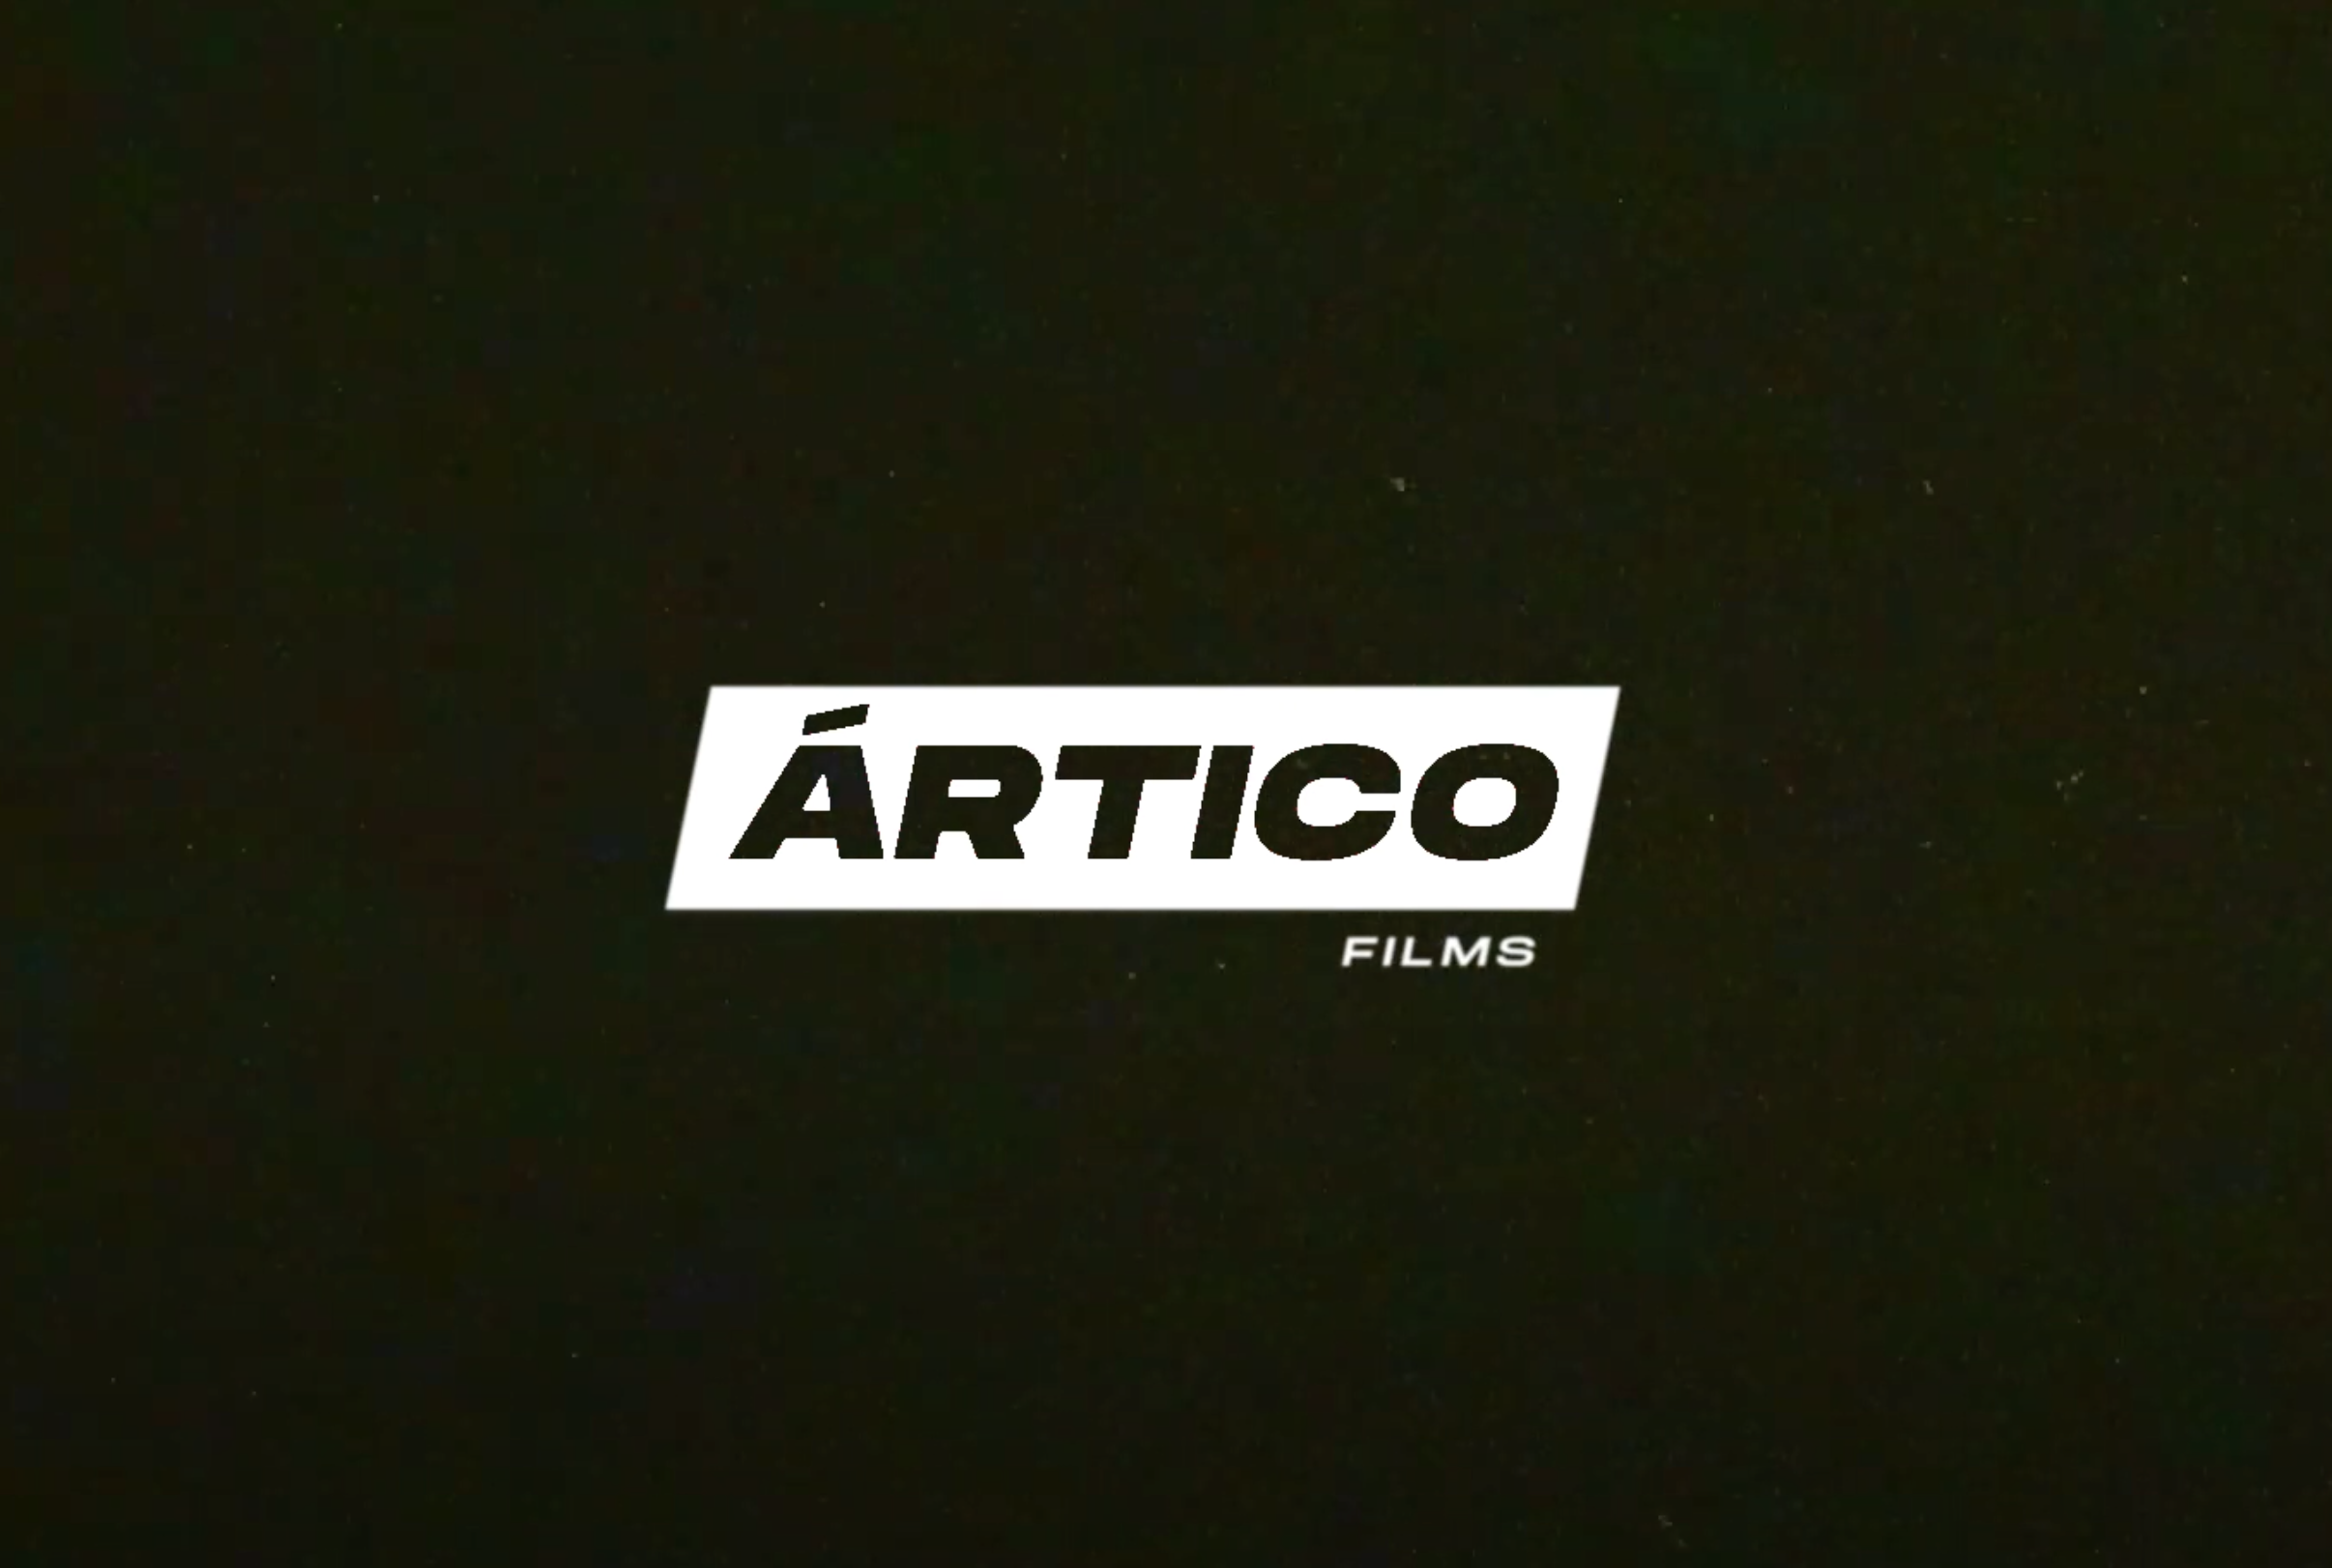 artico-films-ukpik-productions-videoclips-creación-valencia